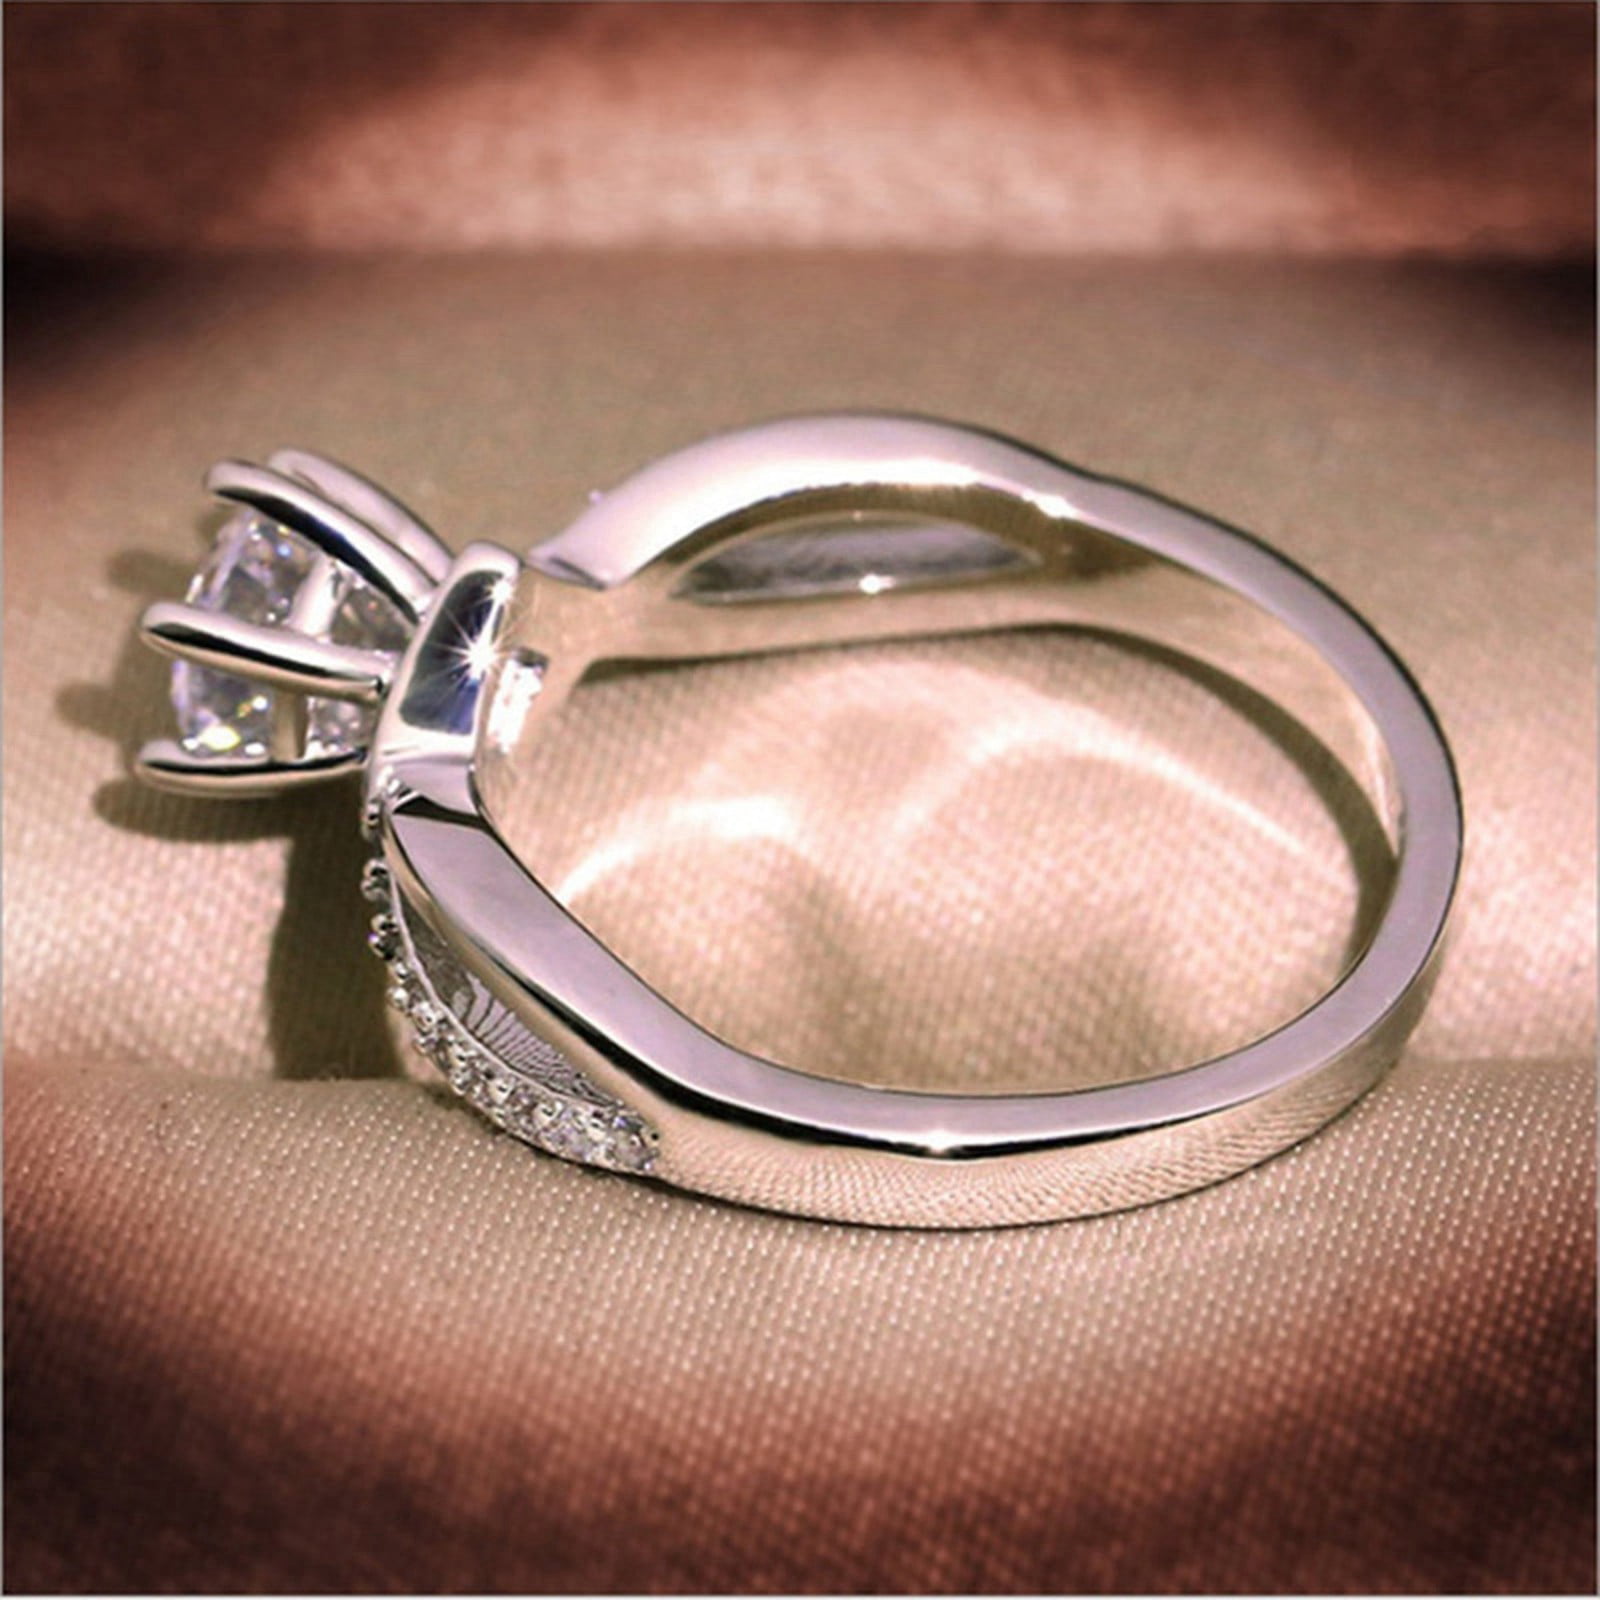 Buy Best Rings For Girls Online Heart Shaped Sparkle Ring Online | TALISMAN